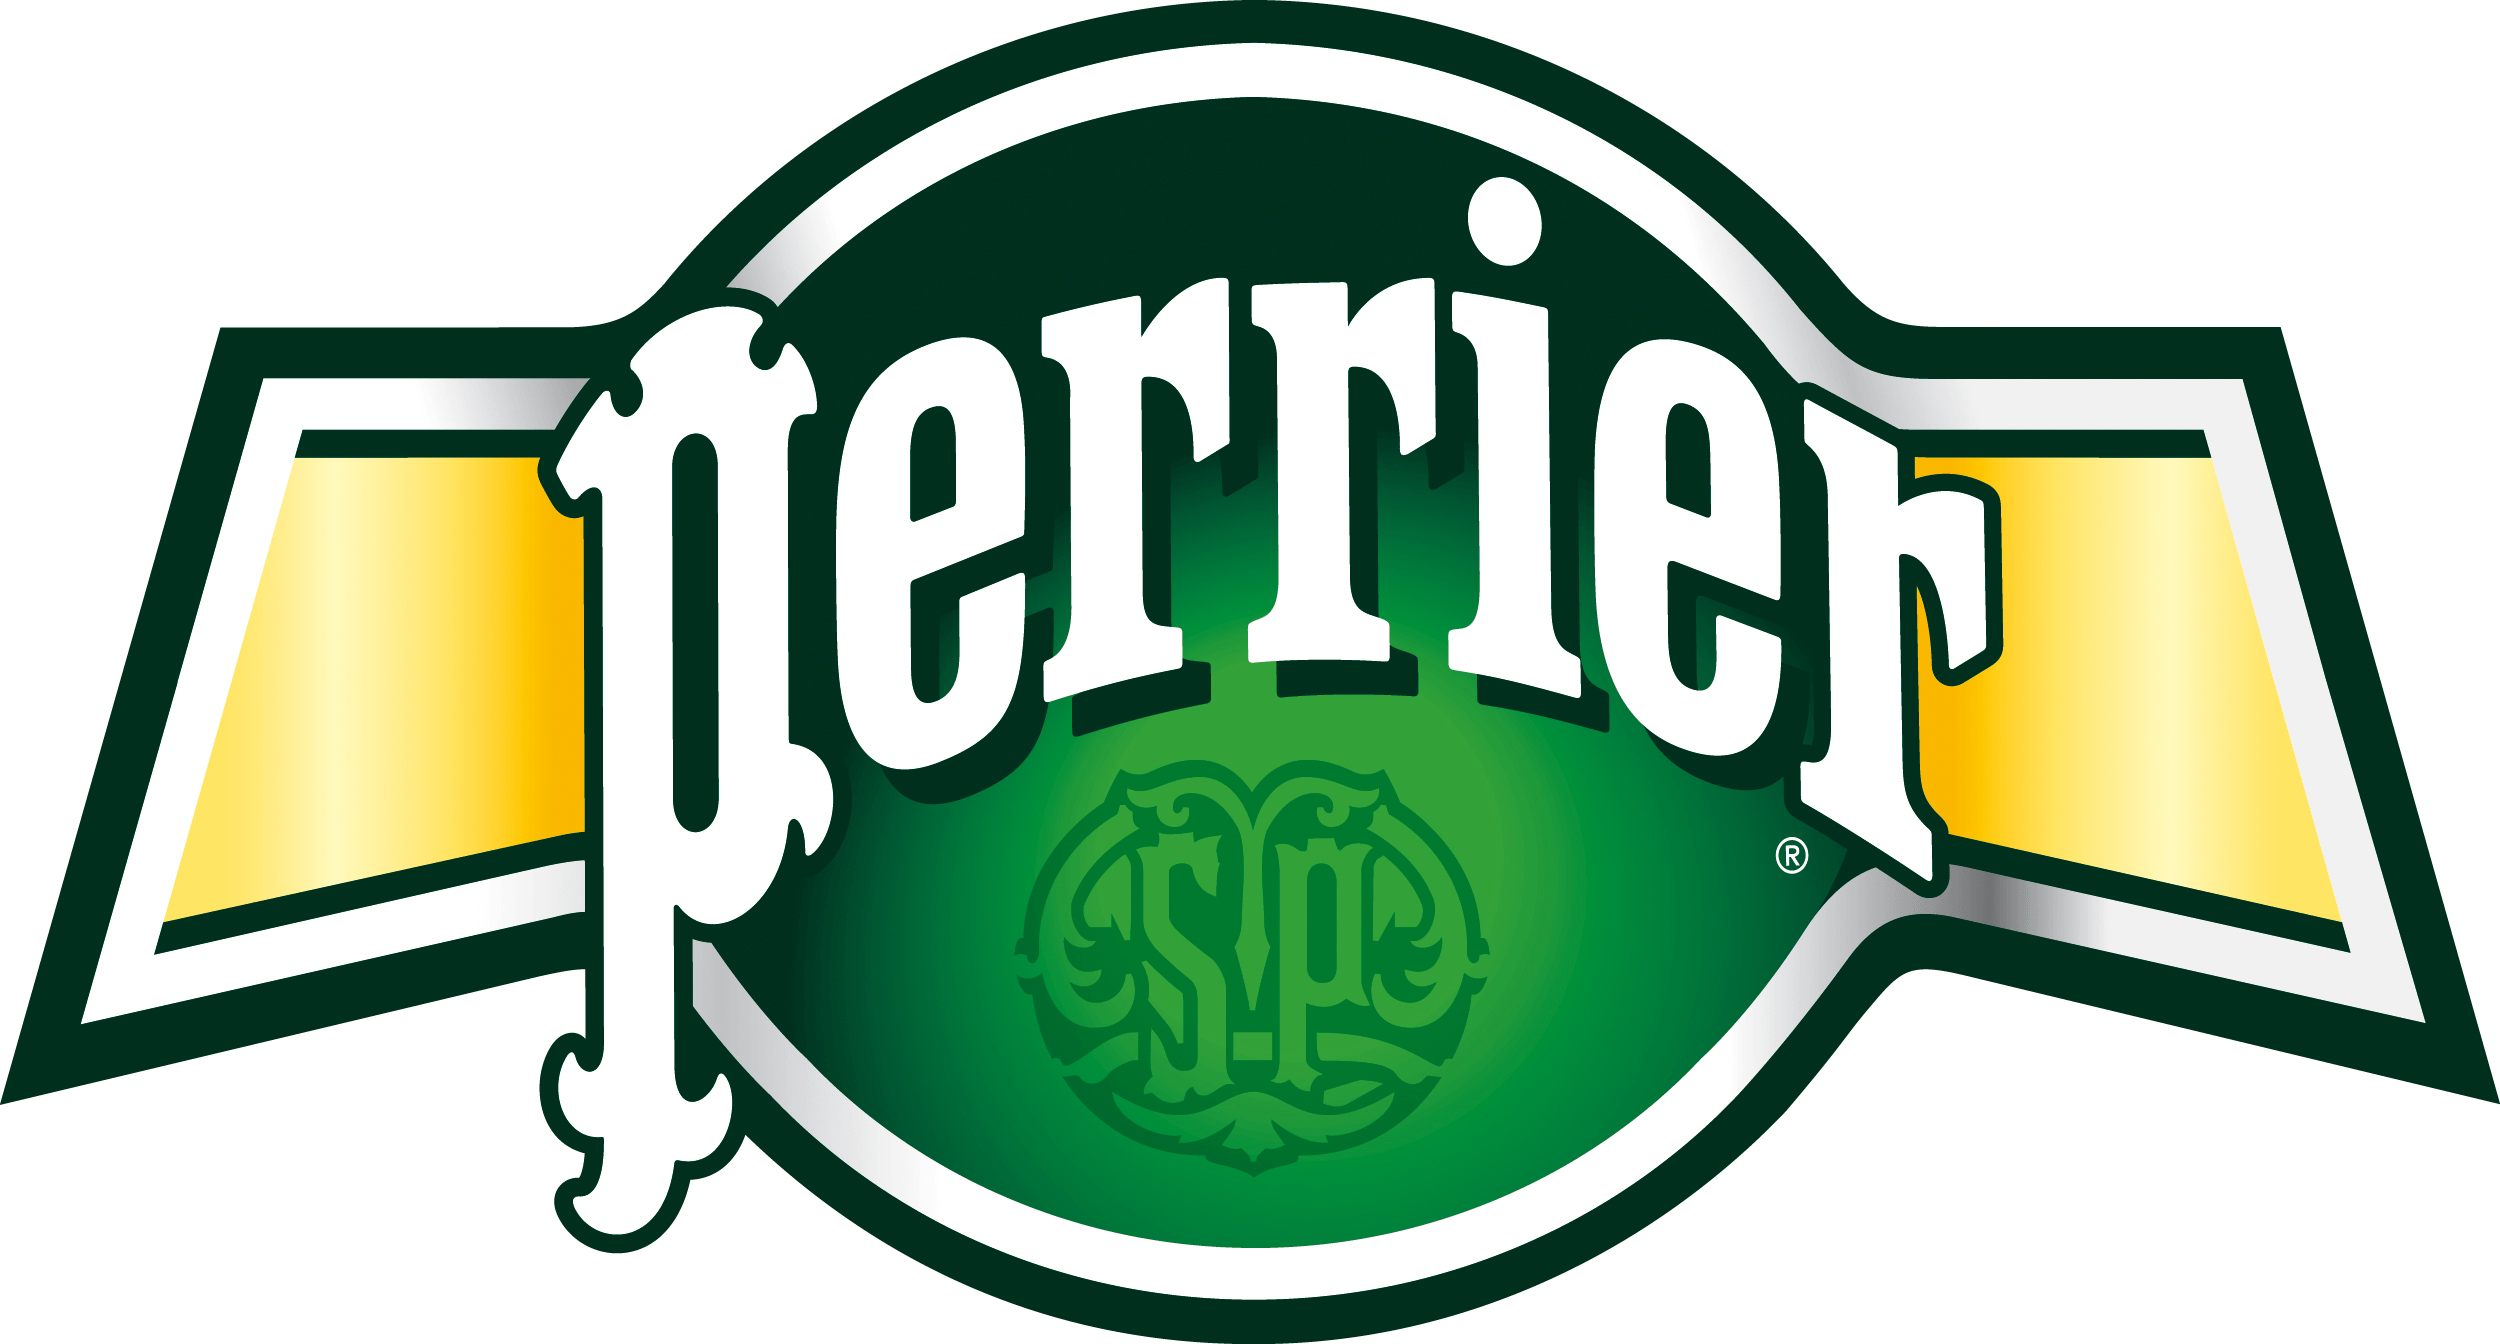 Perrier Logo - Perrier | Logopedia | FANDOM powered by Wikia